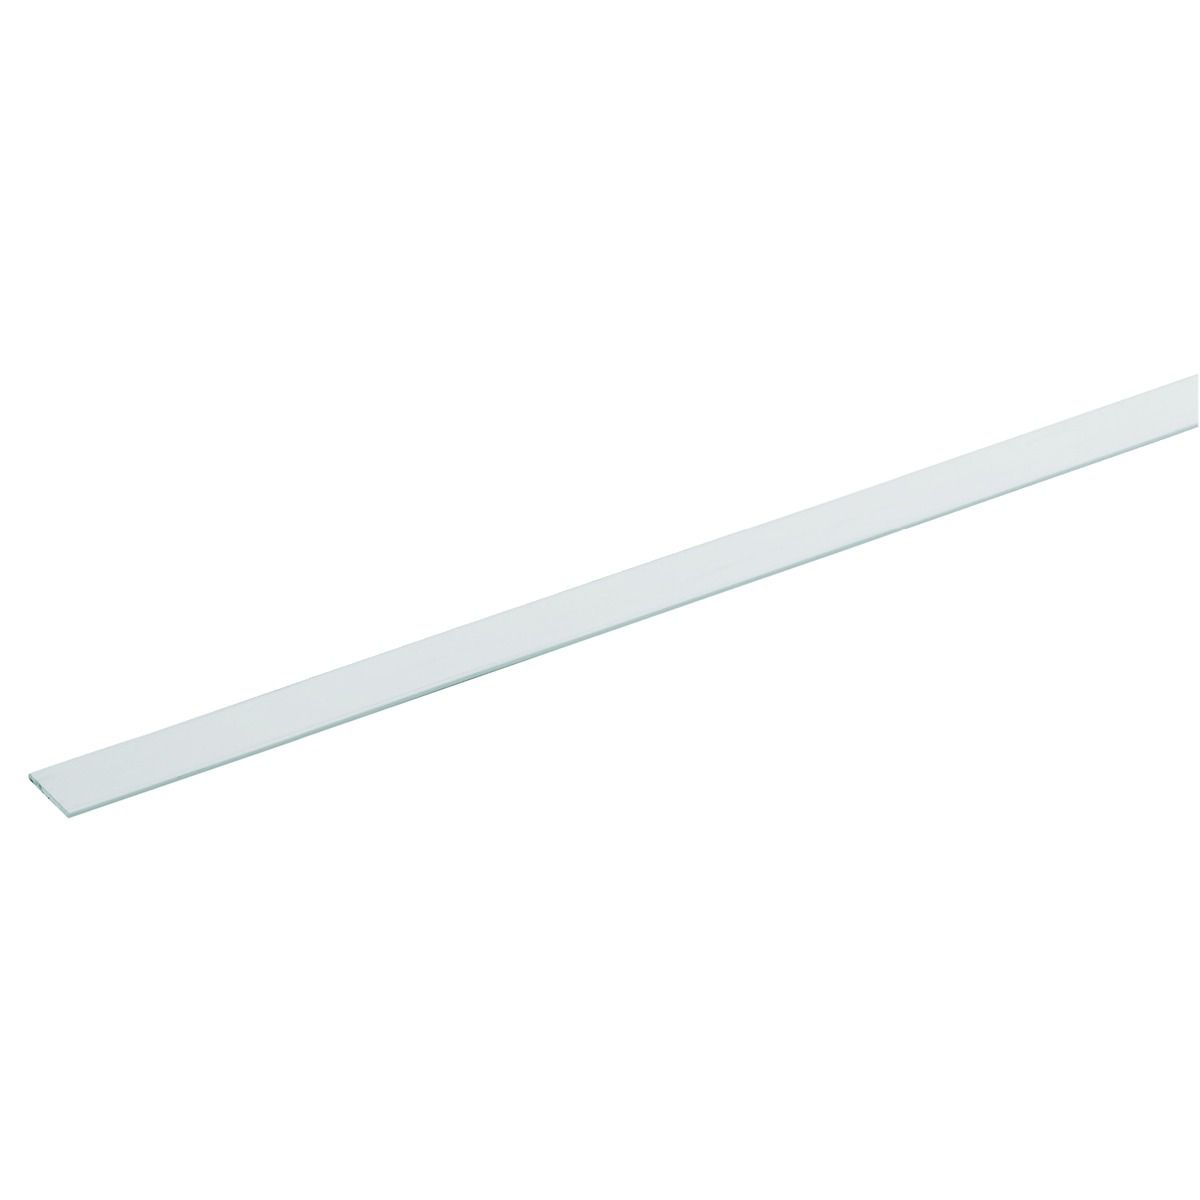 Image of Wickes 23.5mm Multi-Purpose Angle - White PVCu 1m